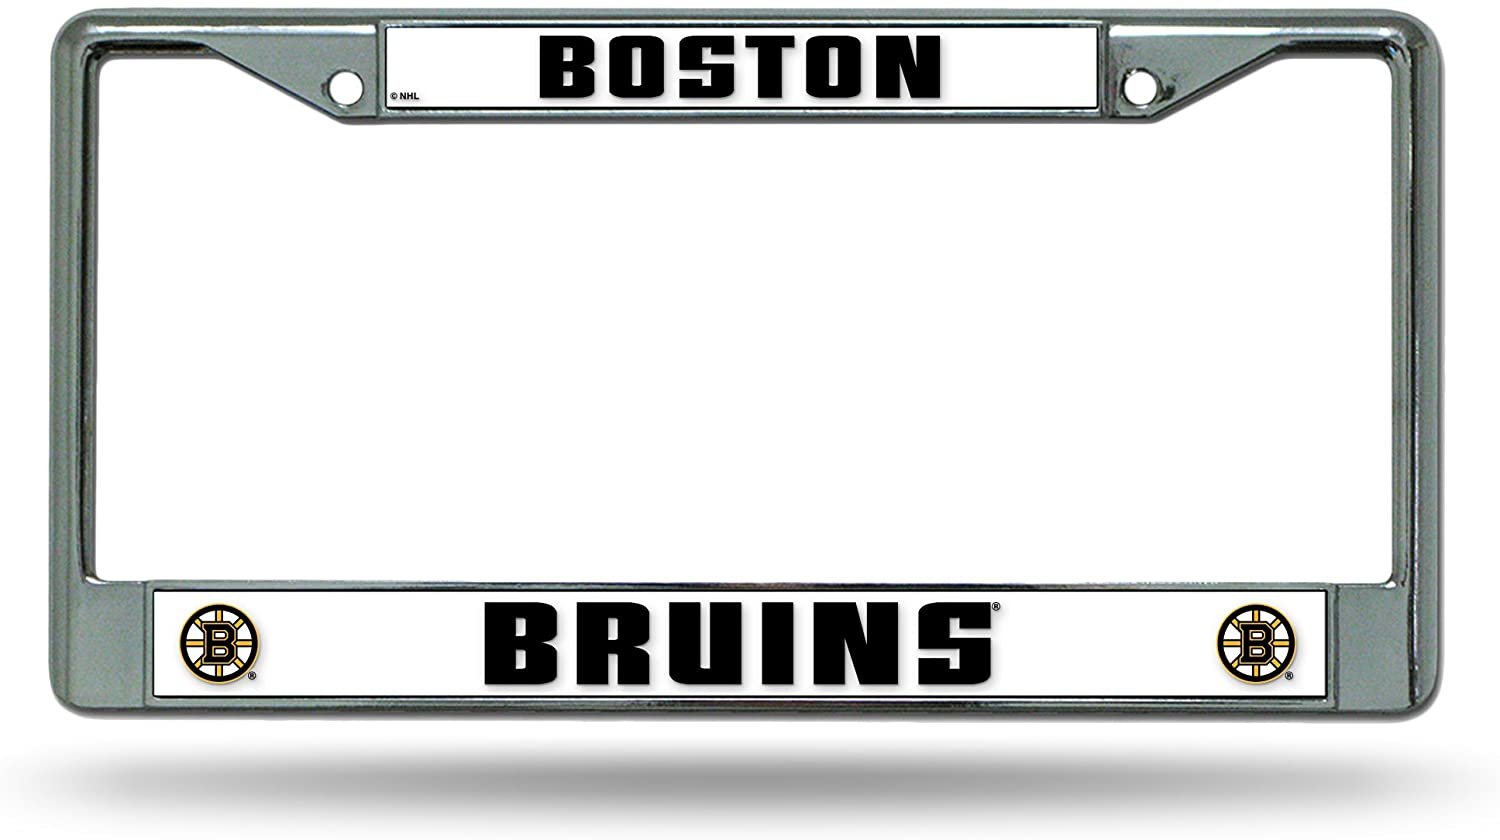 Boston Bruins Premium Metal License Plate Frame Chrome Tag Cover, 12x6 Inch